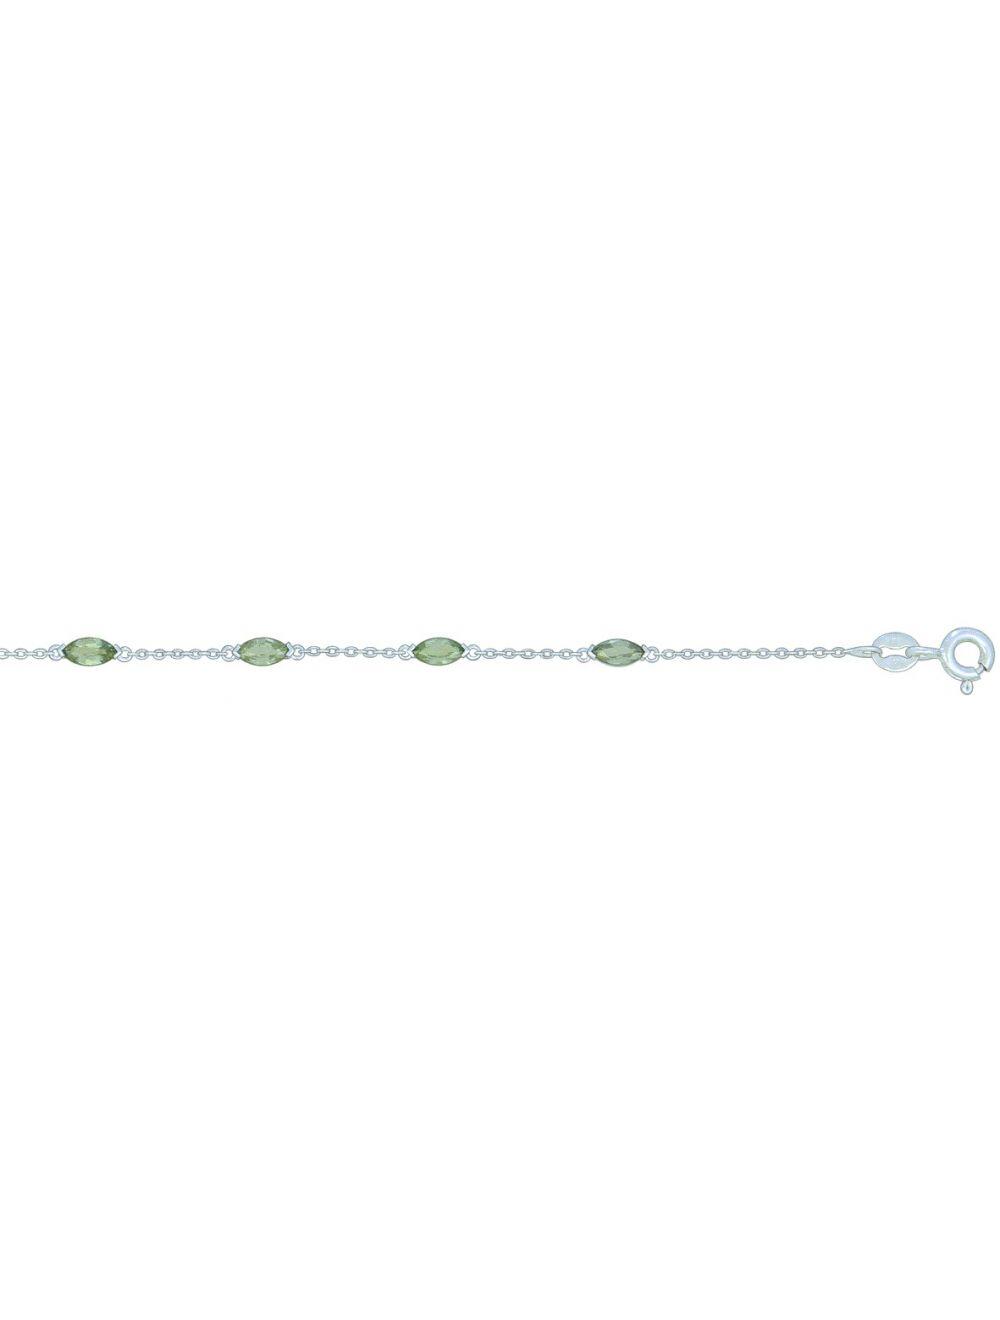 # Bracelet 18cm or blanc avec 1.54ct saphir vert